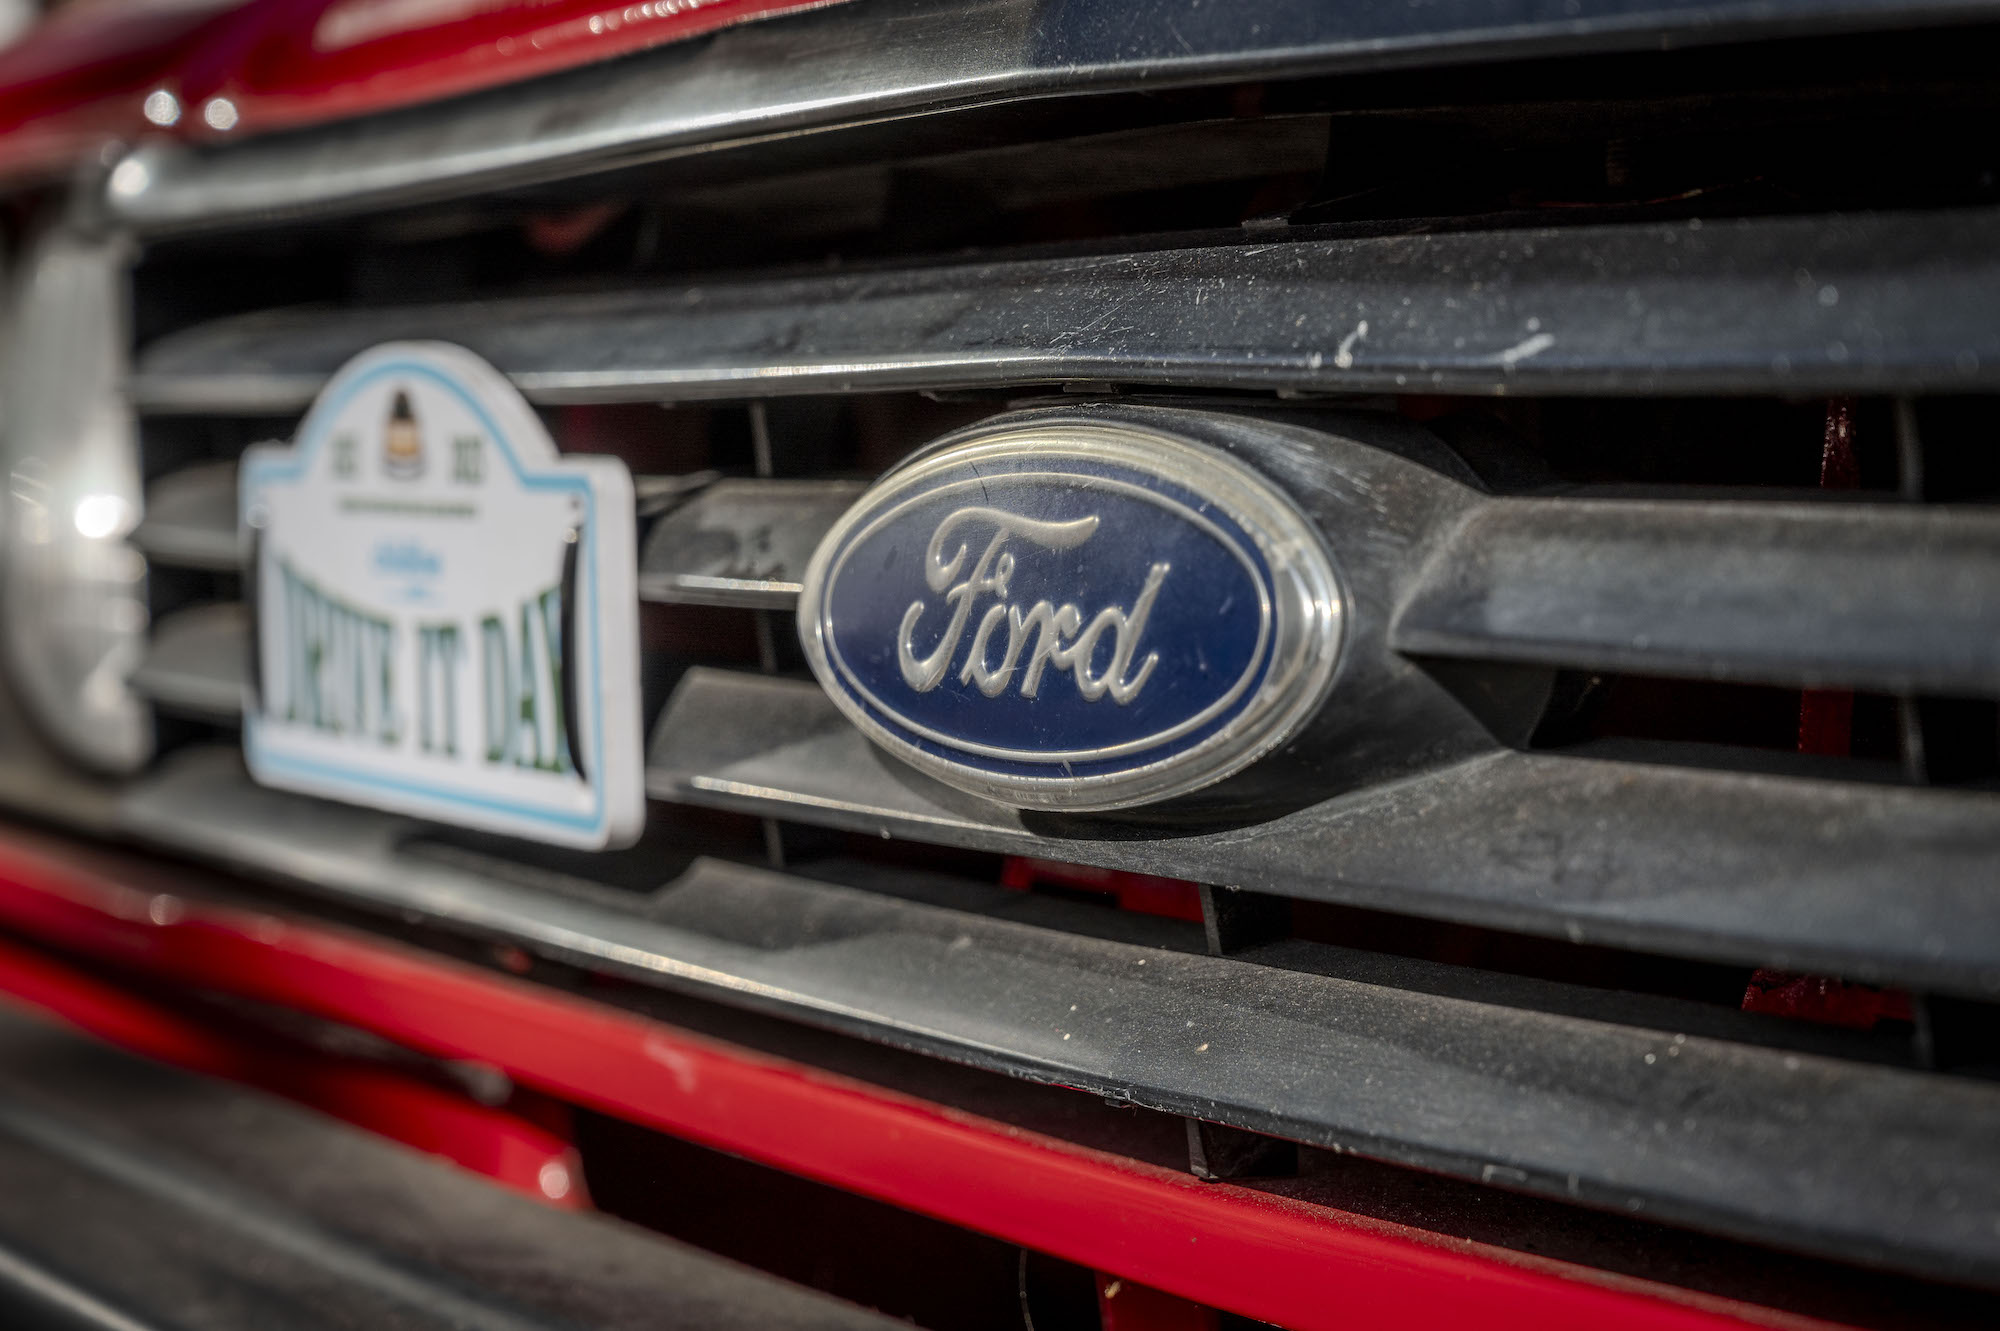 Ford Capri grille badge